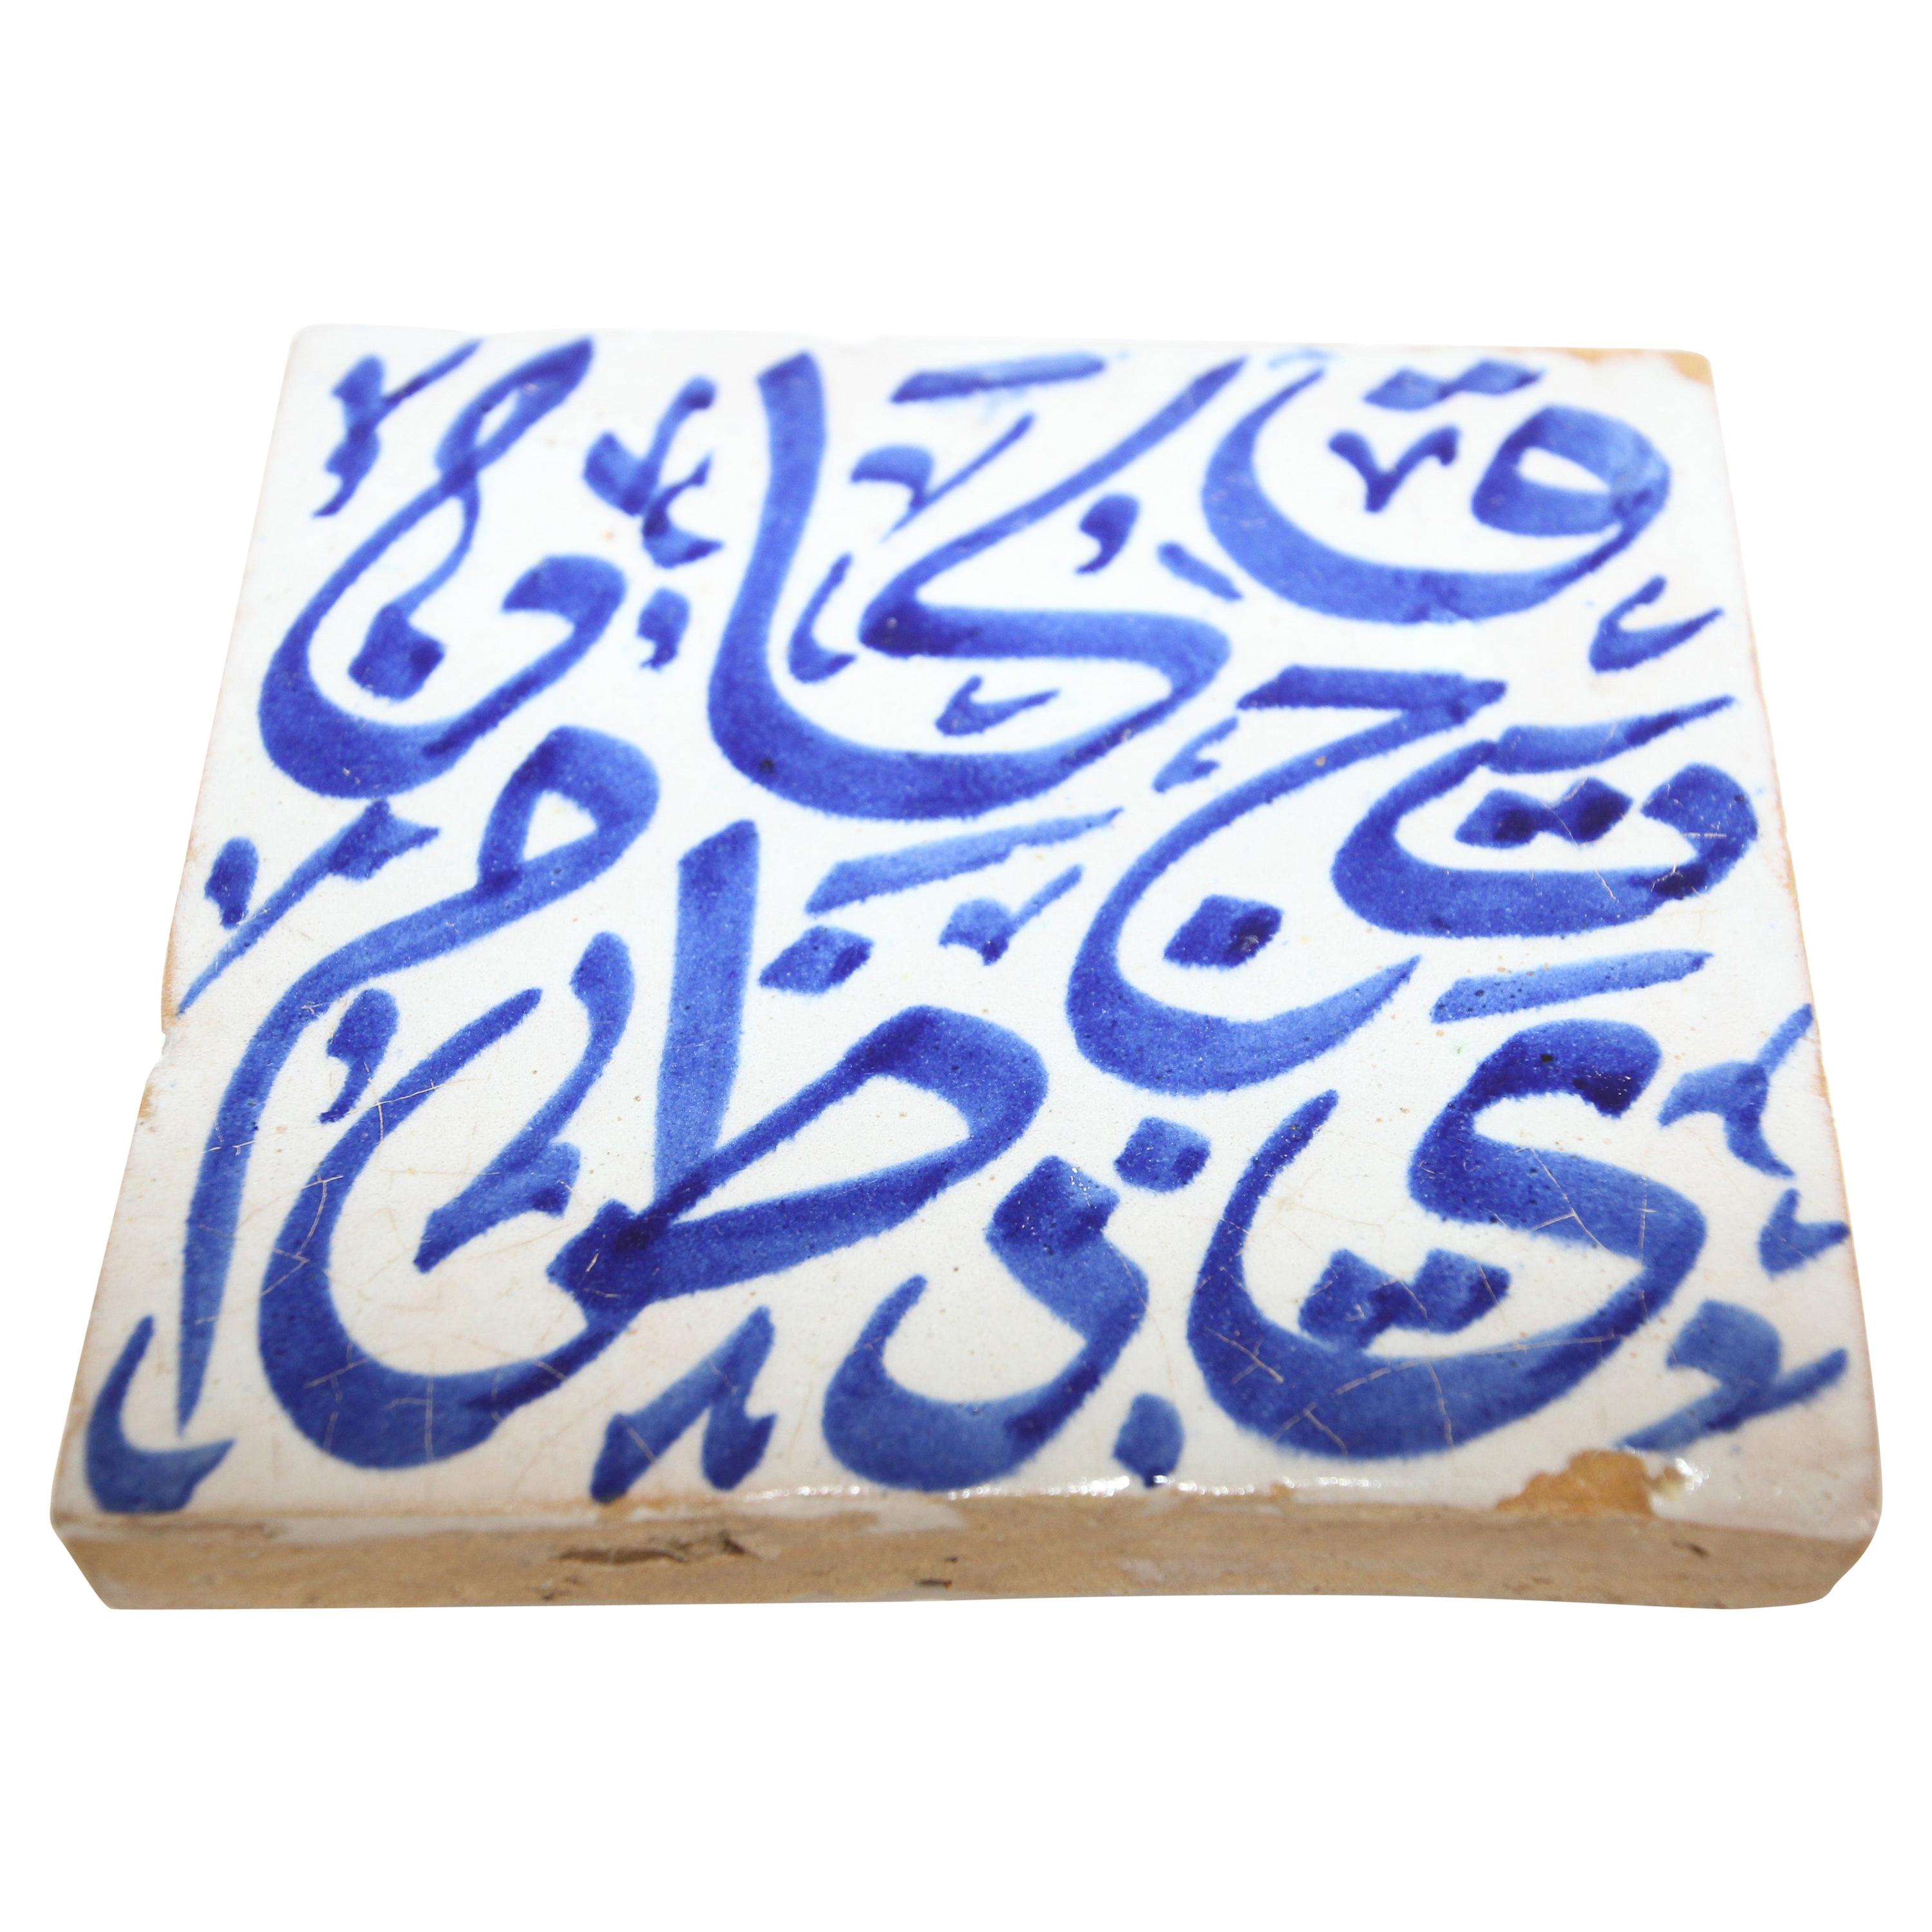 Moorish Tile with Blue Arabic Writing